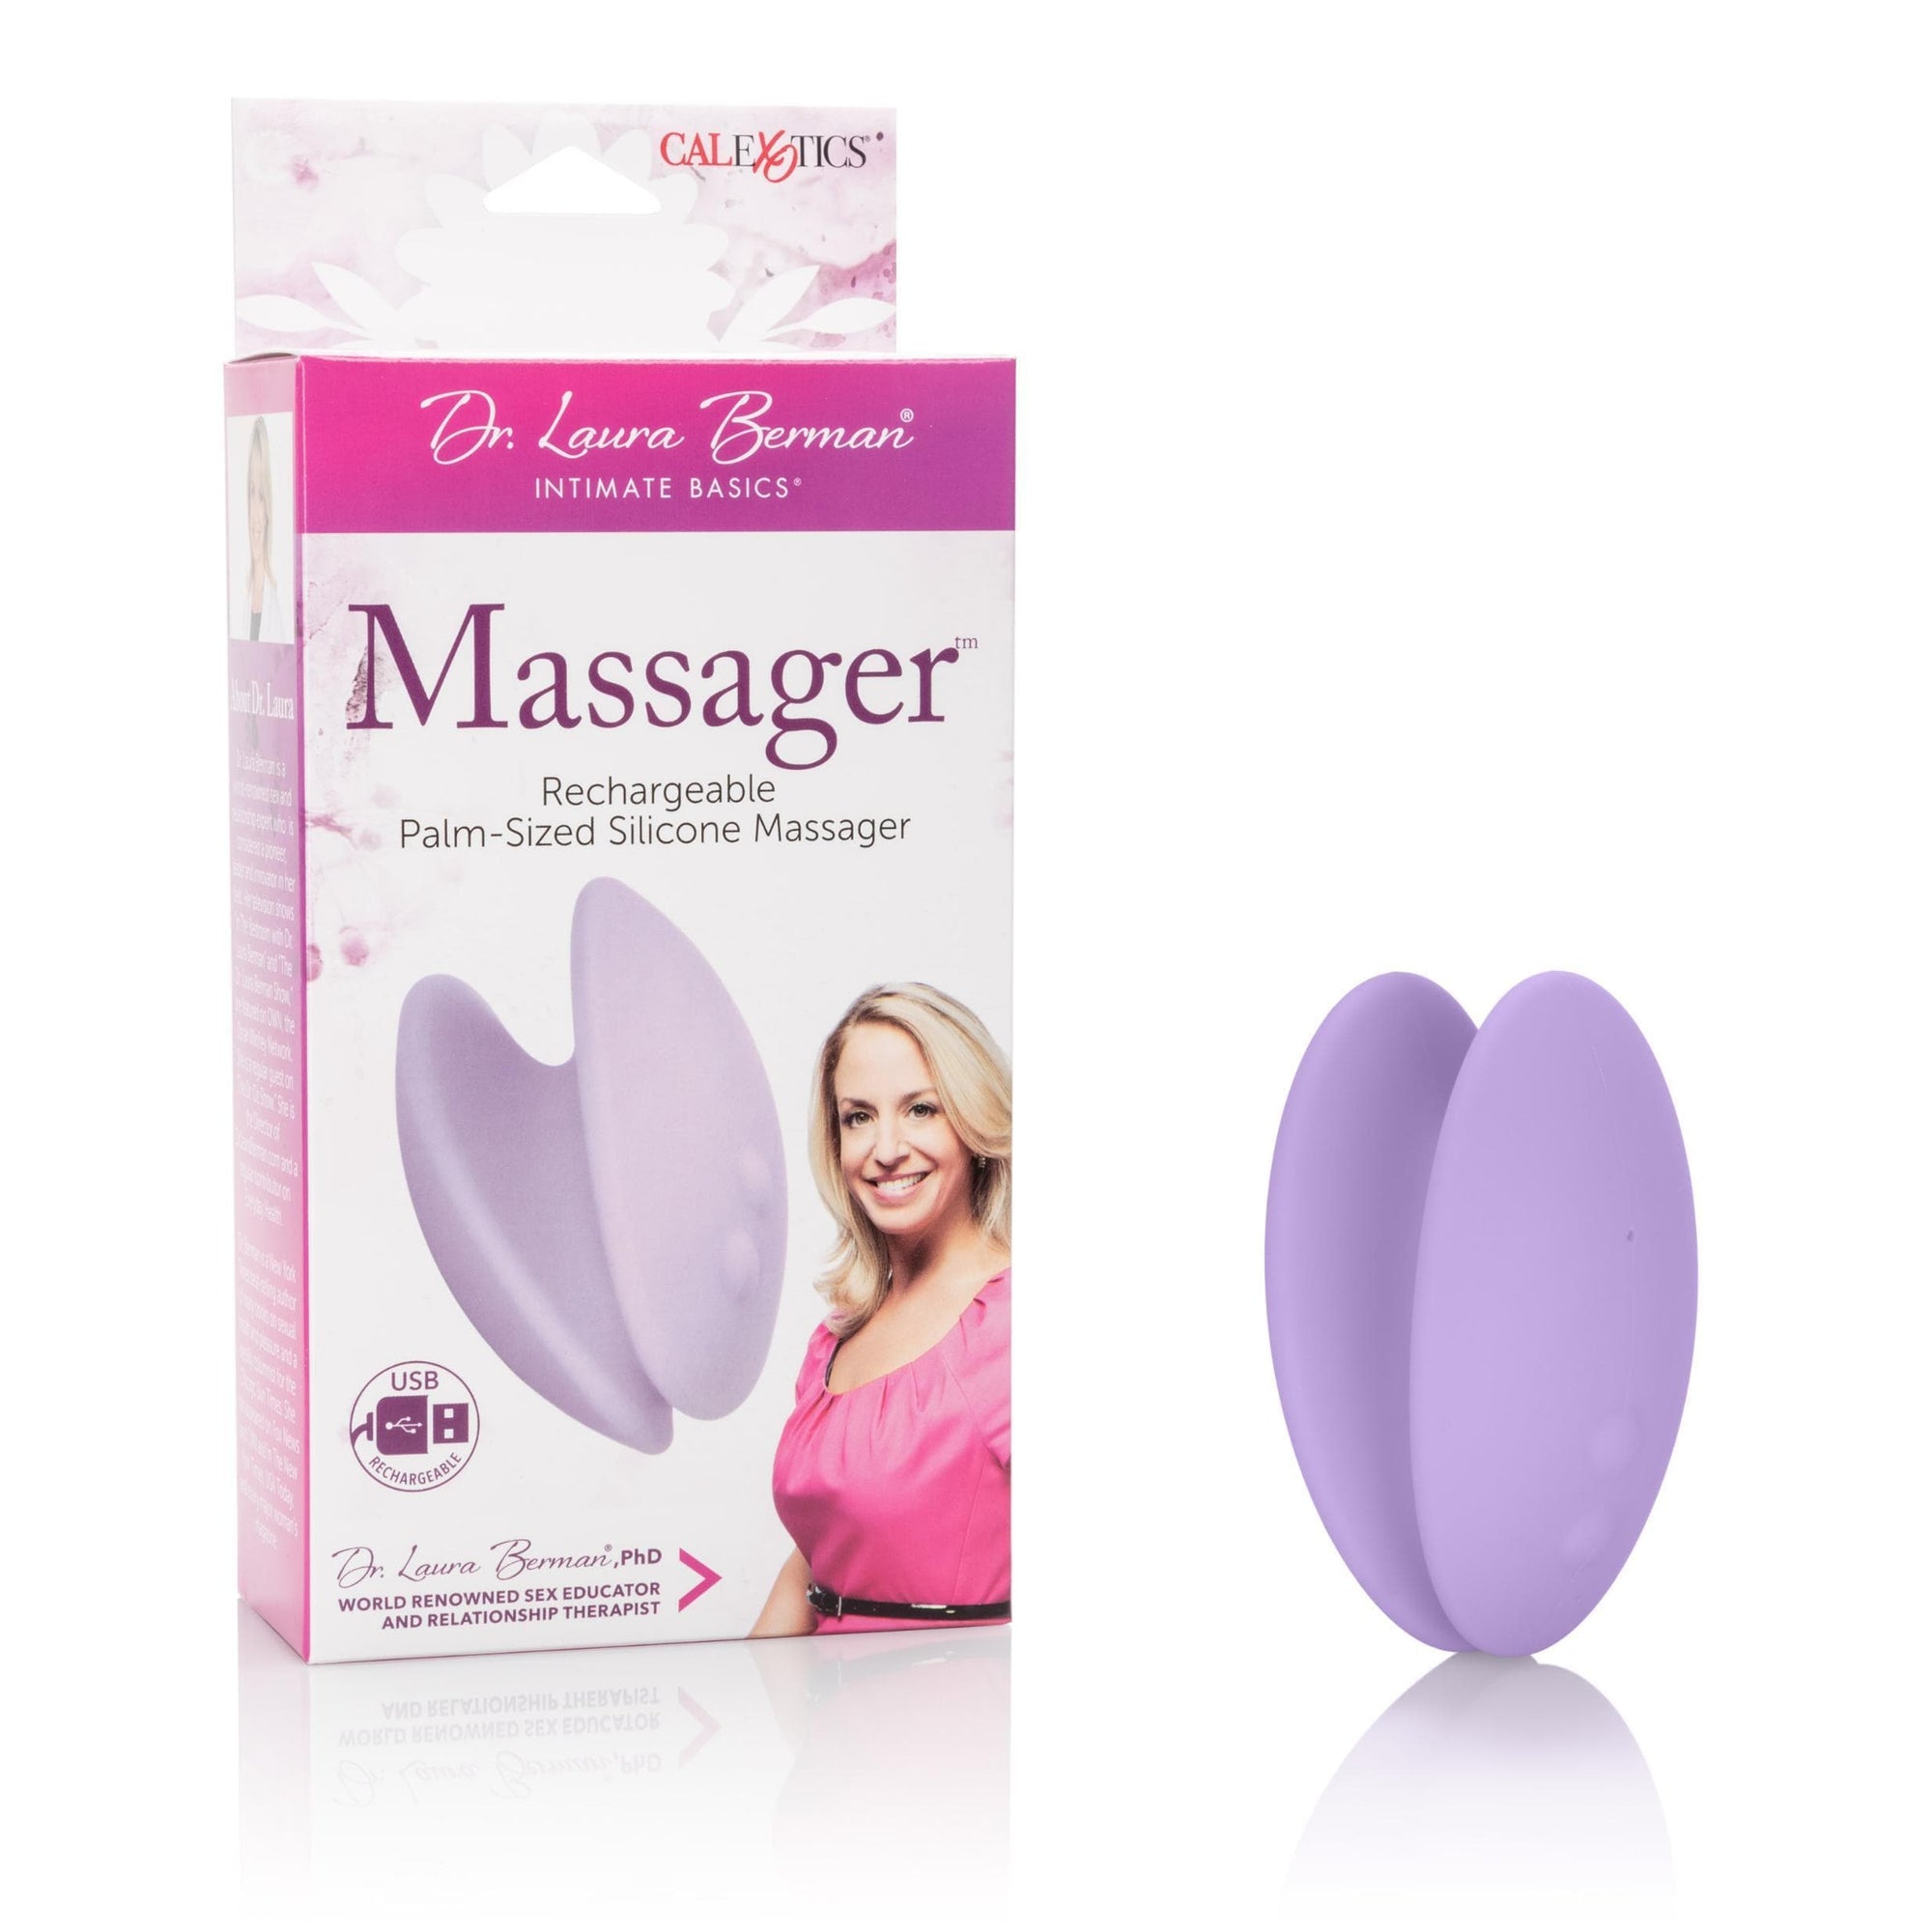 calexotics - dr laura berman massager palm sized silicone massager